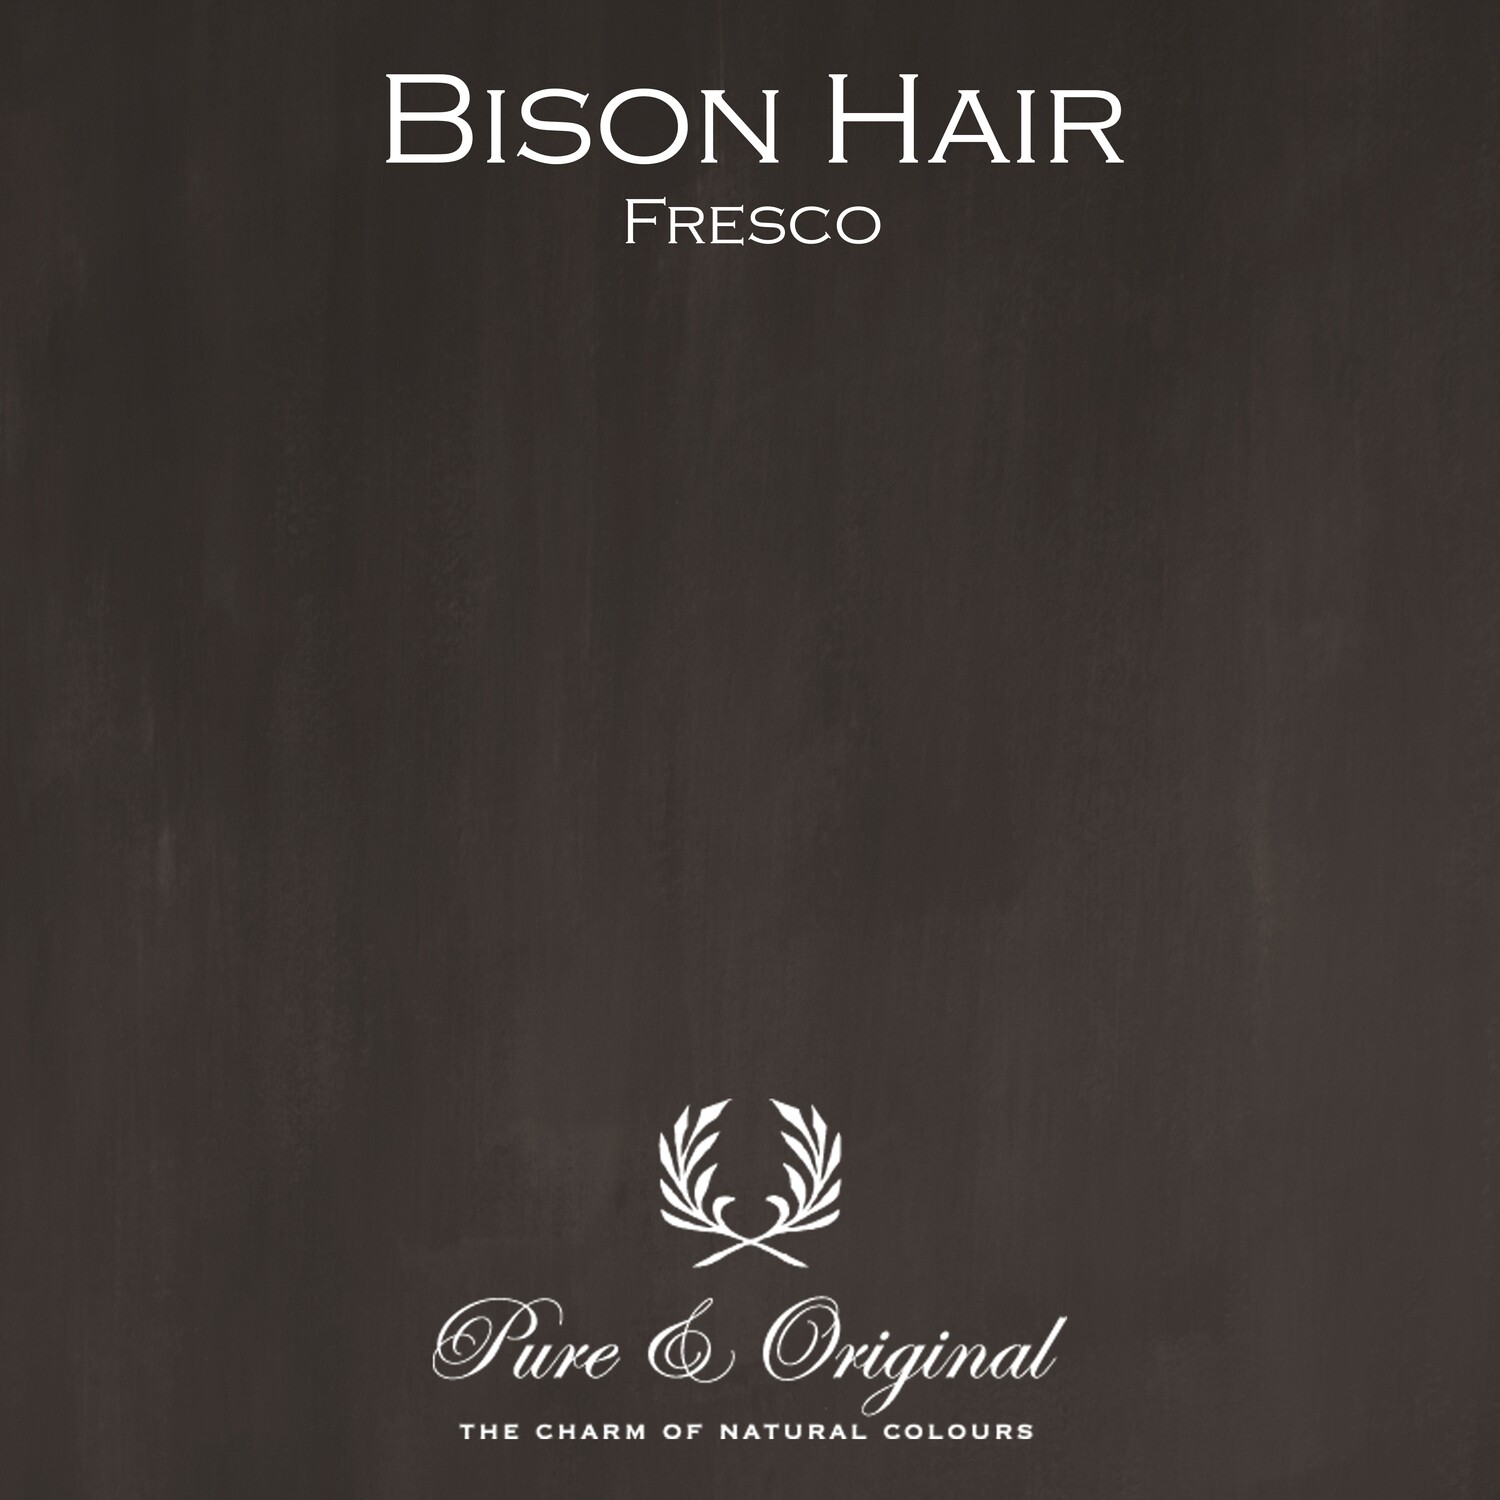 Bison Hair Fresco